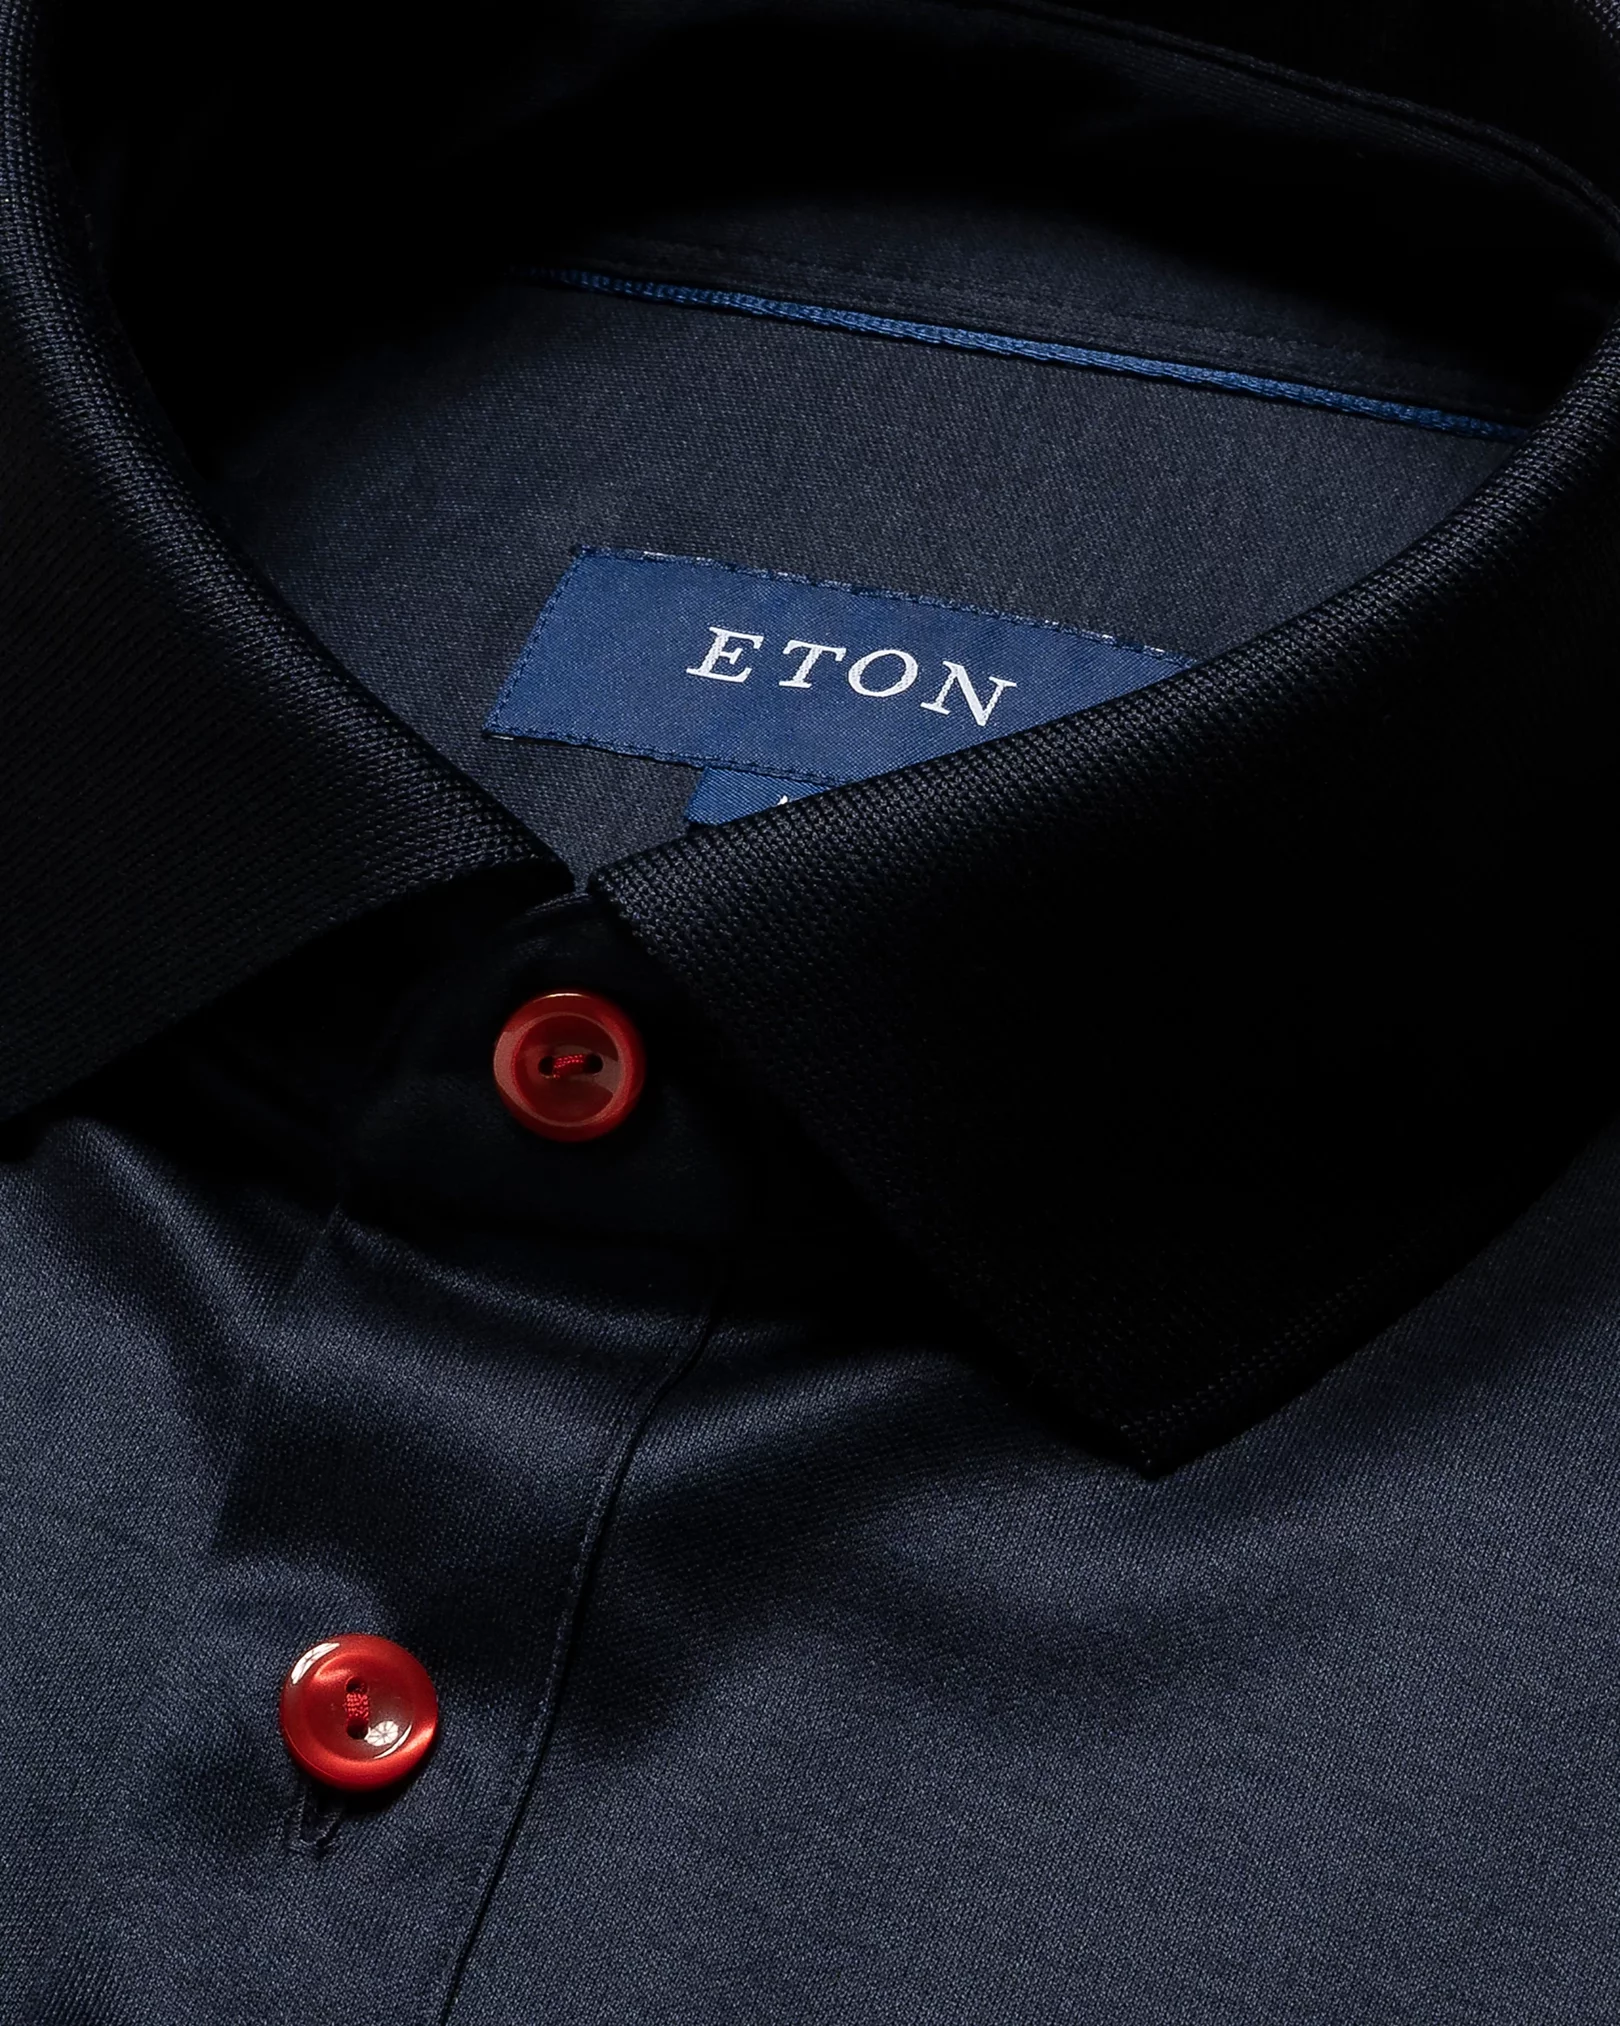 Eton - navy blue jersey knitted short sleeve